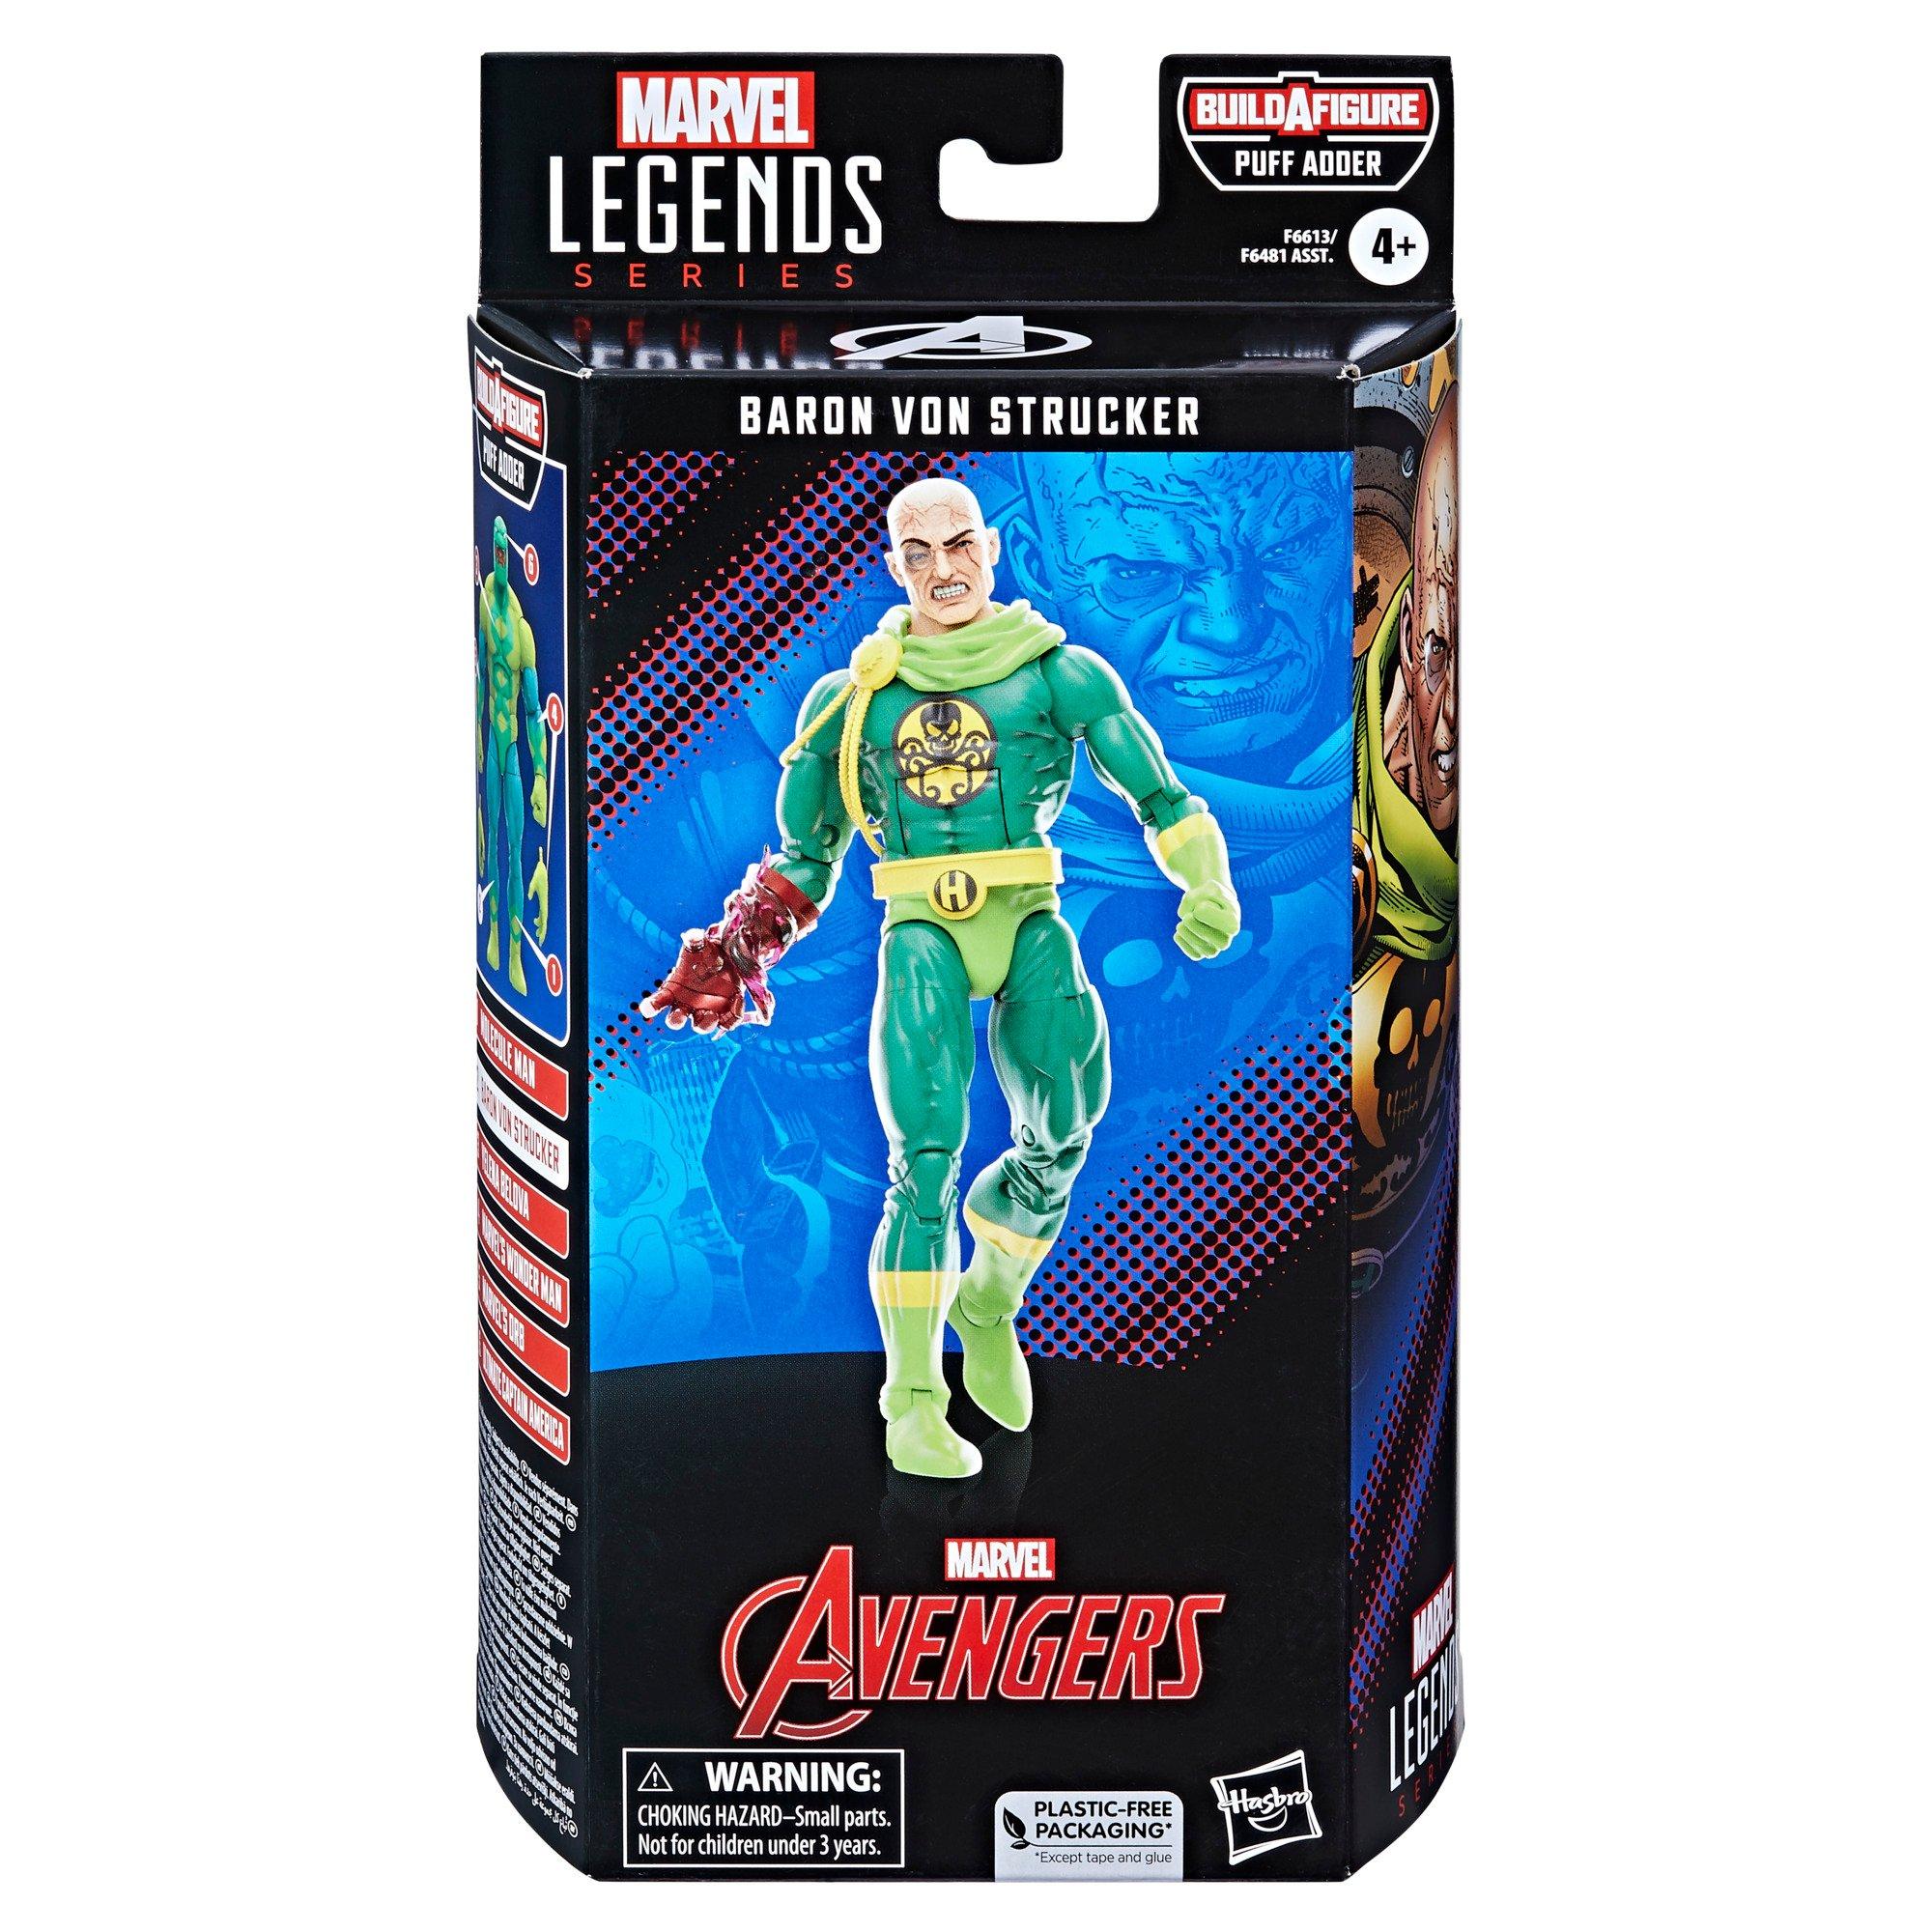 Hasbro Marvel Legends Series Avengers Baron Von Strucker Build-A-Figure 6-in Action Figure